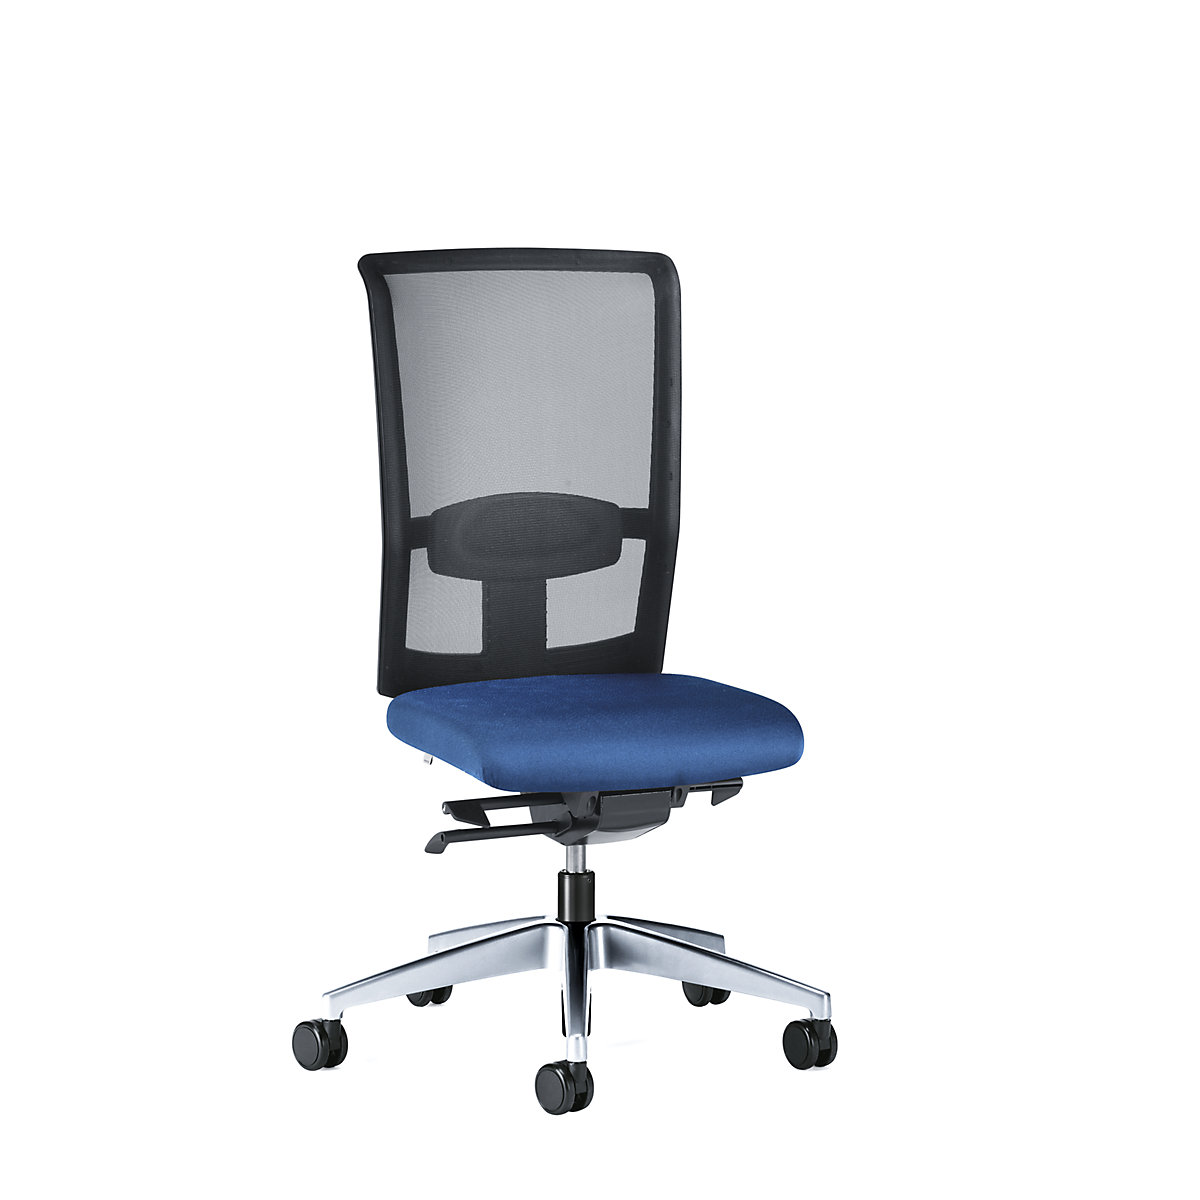 GOAL AIR office swivel chair, back rest height 545 mm – interstuhl, polished frame, with hard castors, gentian blue, seat depth 410 mm-2